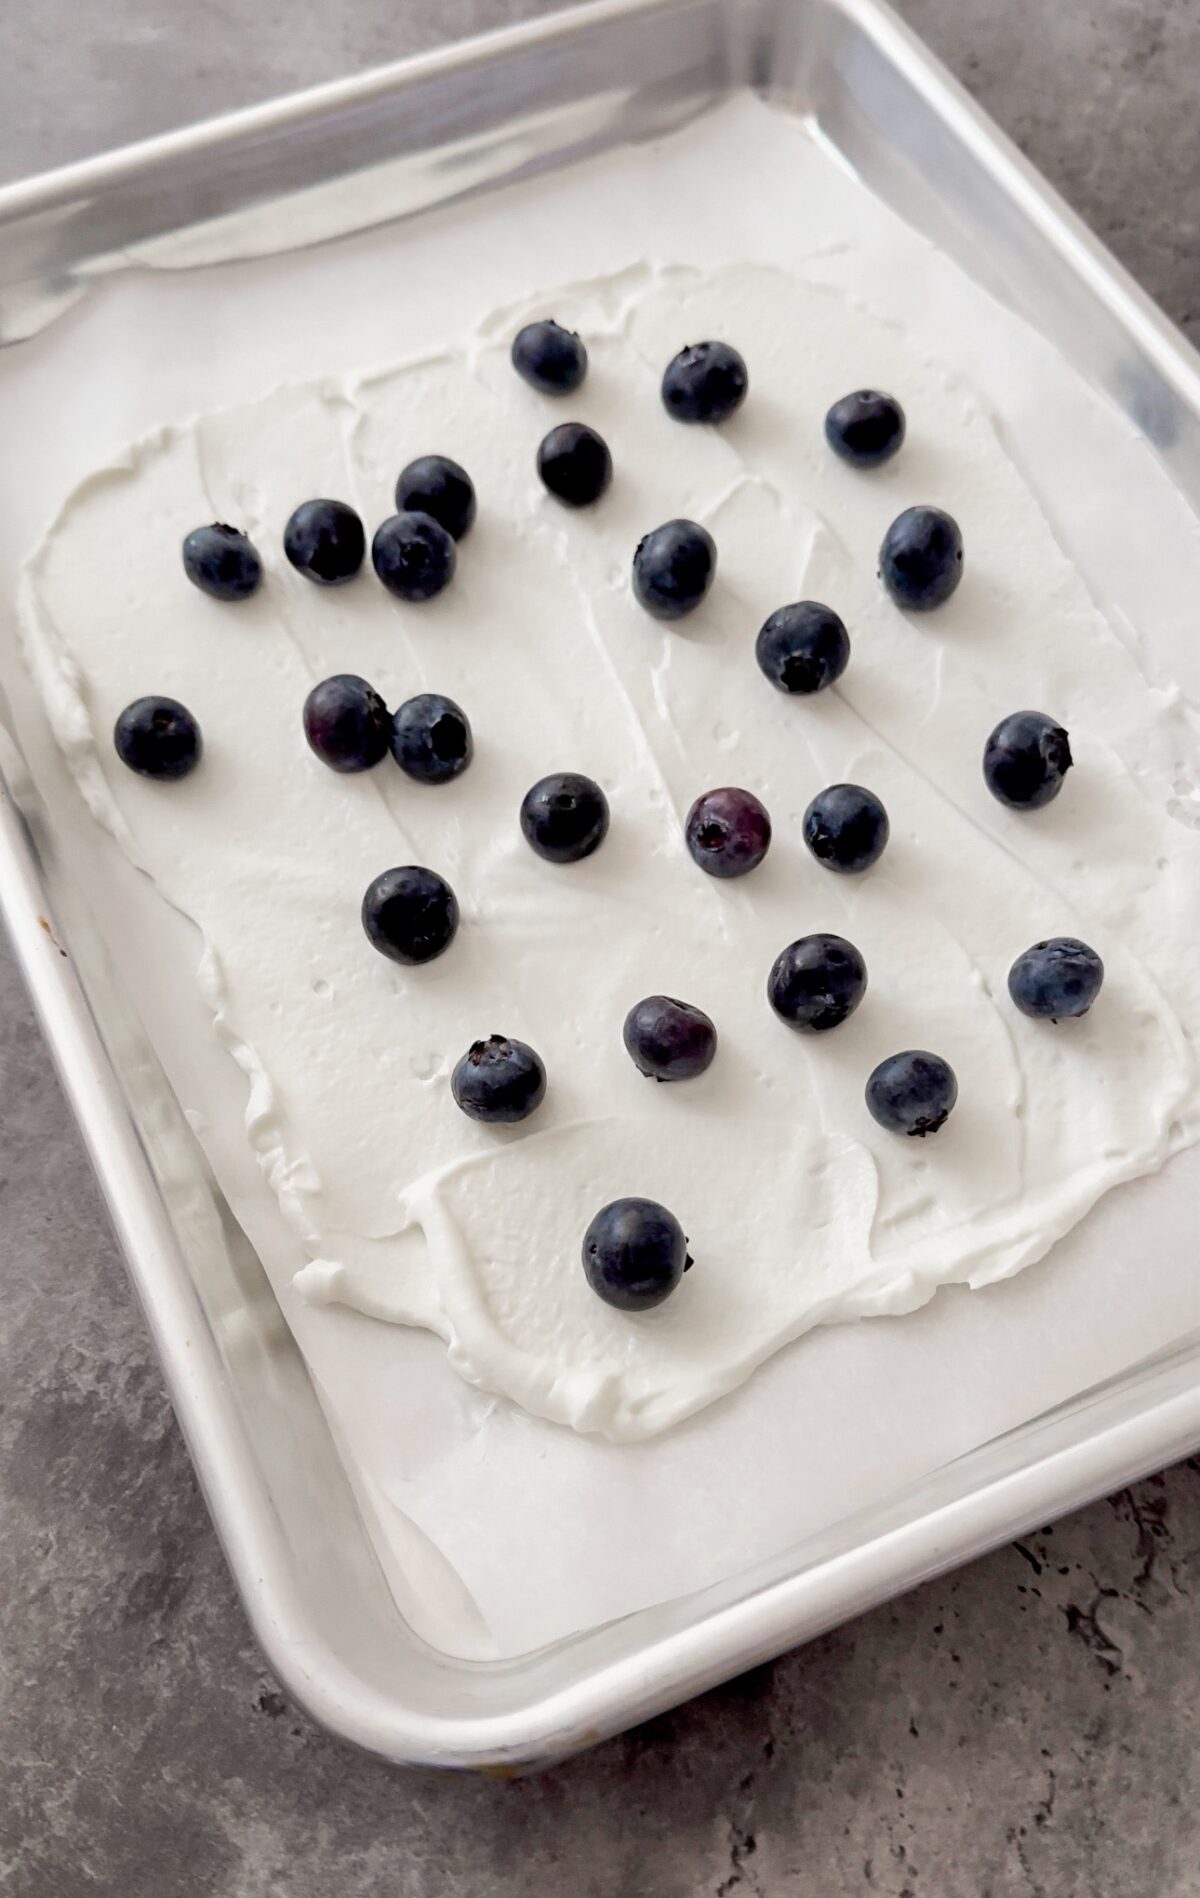 blueberries sprinkled on yogurt spread on baking sheet
